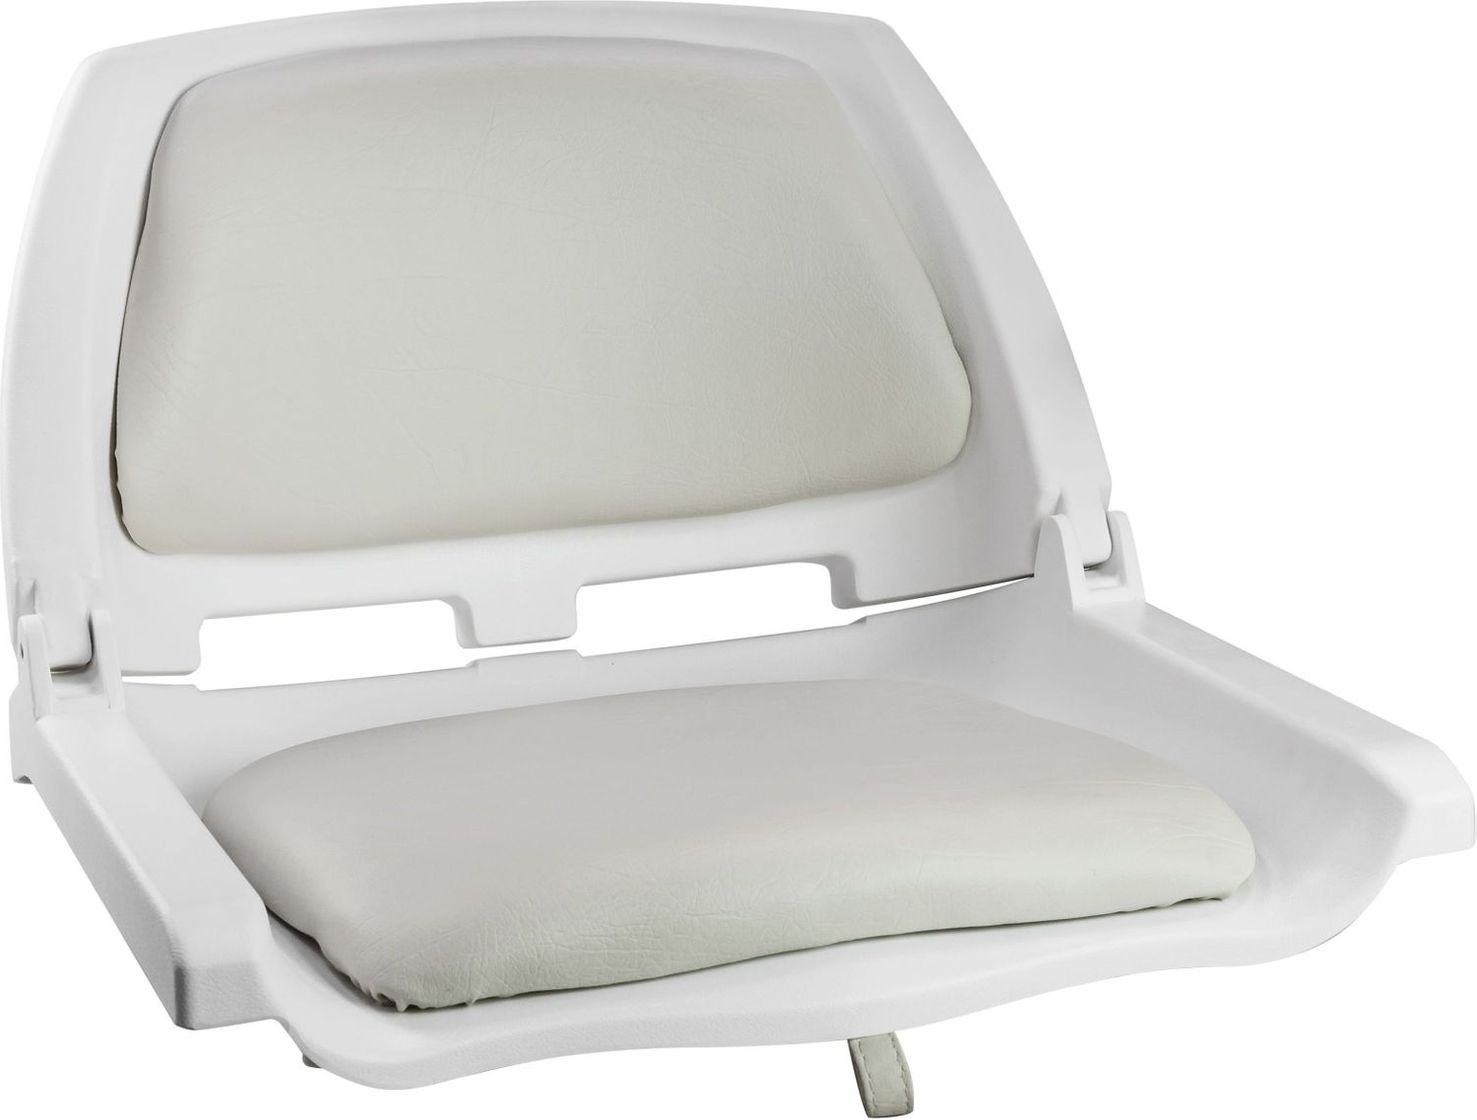 Кресло складное мягкое TRAVELER, цвет белый/серый (упаковка из 2 шт.) 1061104C_pkg_2 кресло складное мягкое traveler серый серый упаковка из 2 шт 1061100c pkg 2